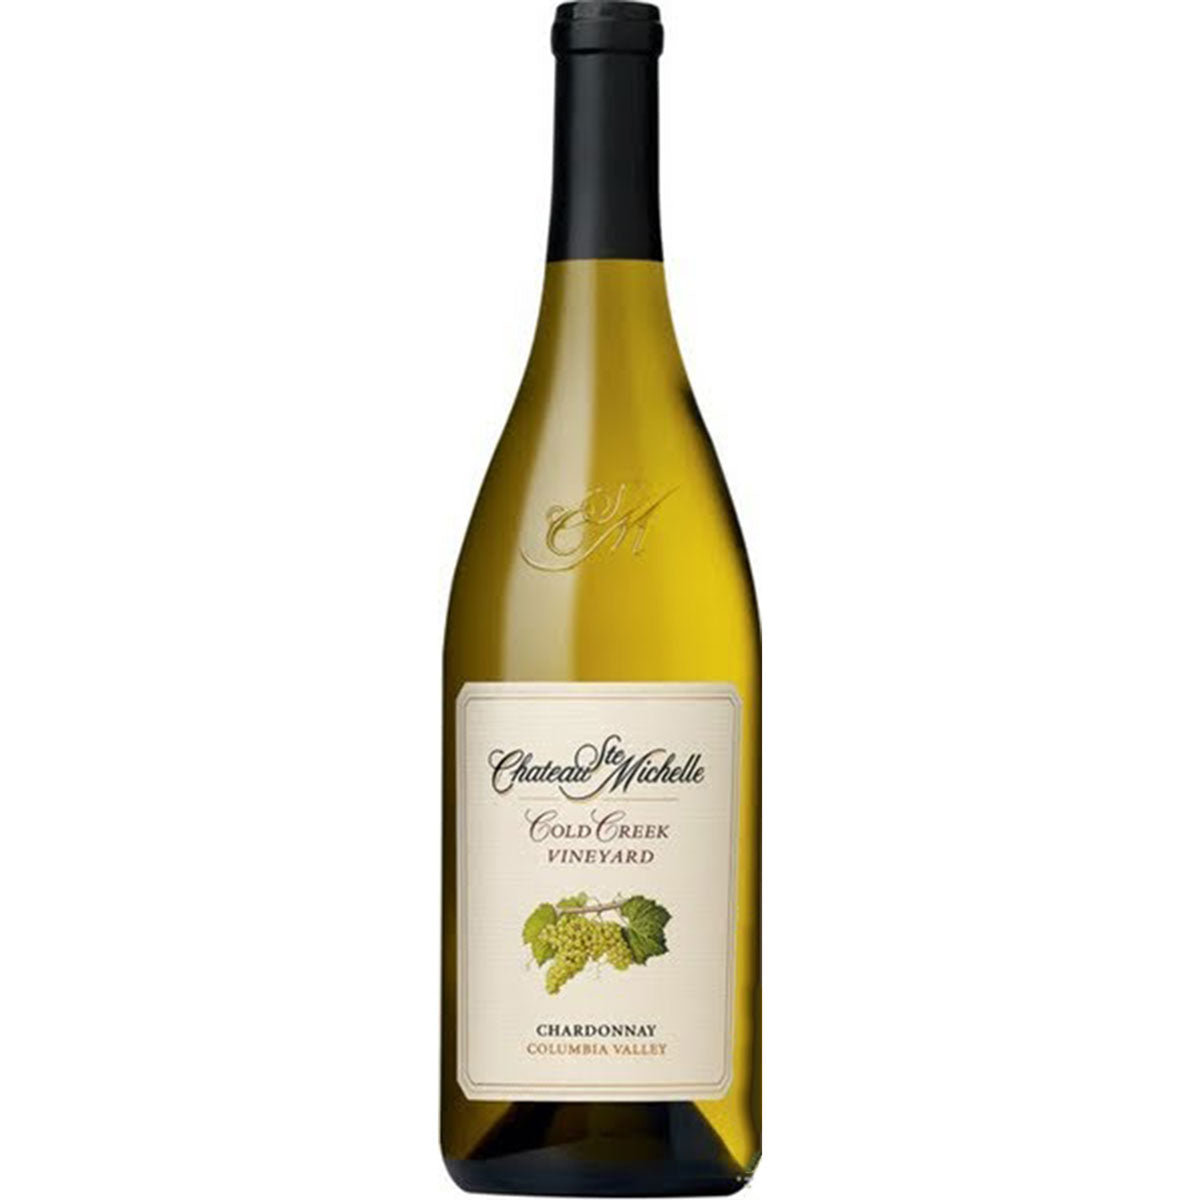 Chateau Ste Michelle Cold Creek Vineyard Chardonnay 2016